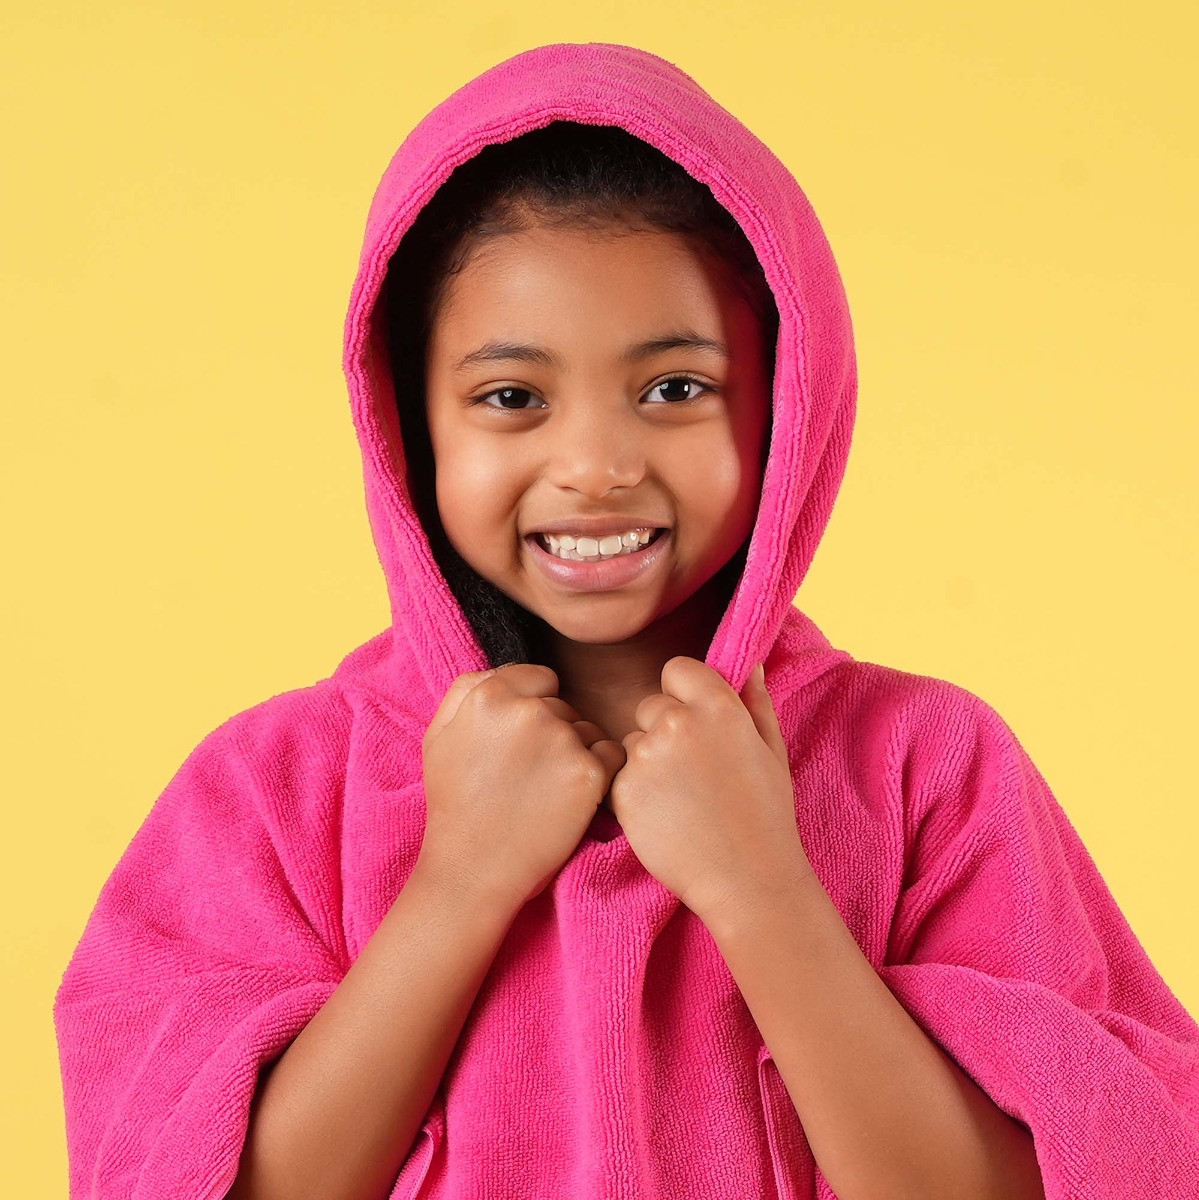 Brentfords Kids Poncho Towel, Pink - One Size>